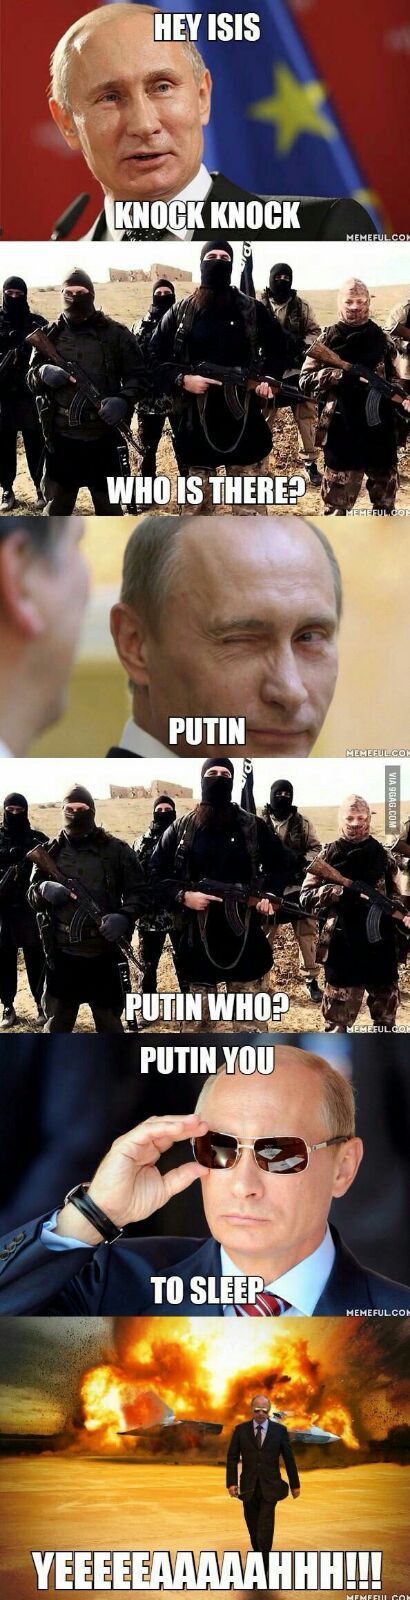 Putin rules v: - meme